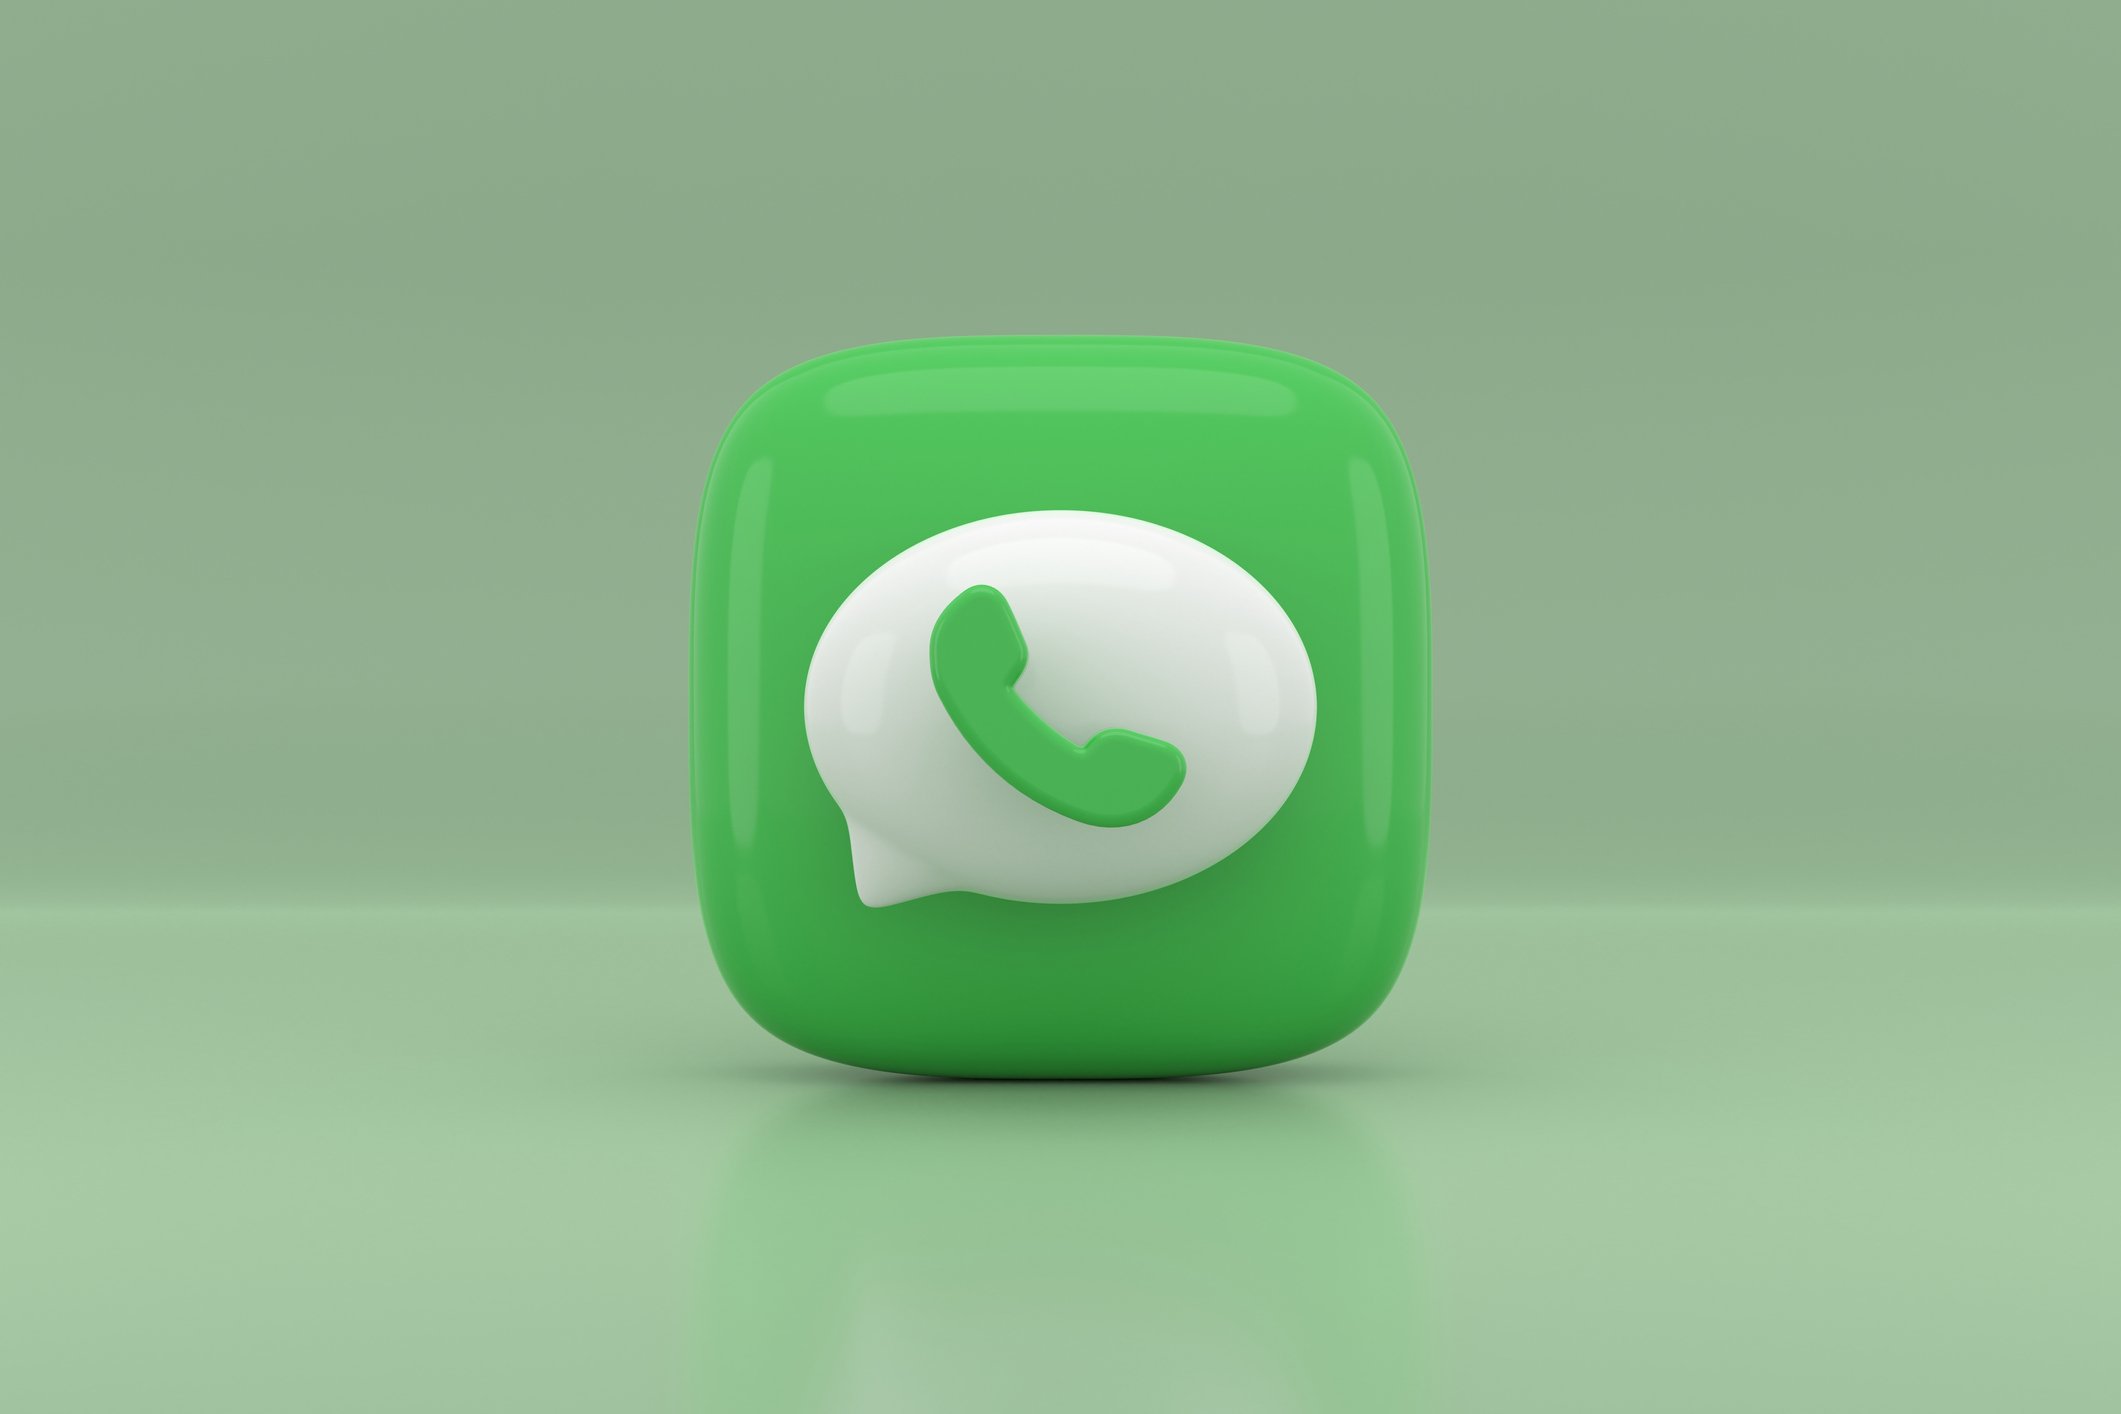 WhatsApp: Ήρθε η μεγαλύτερη αλλαγή στην πλατφόρμα - Δες πως θα ενεργοποιήσεις τις αντιδράσεις